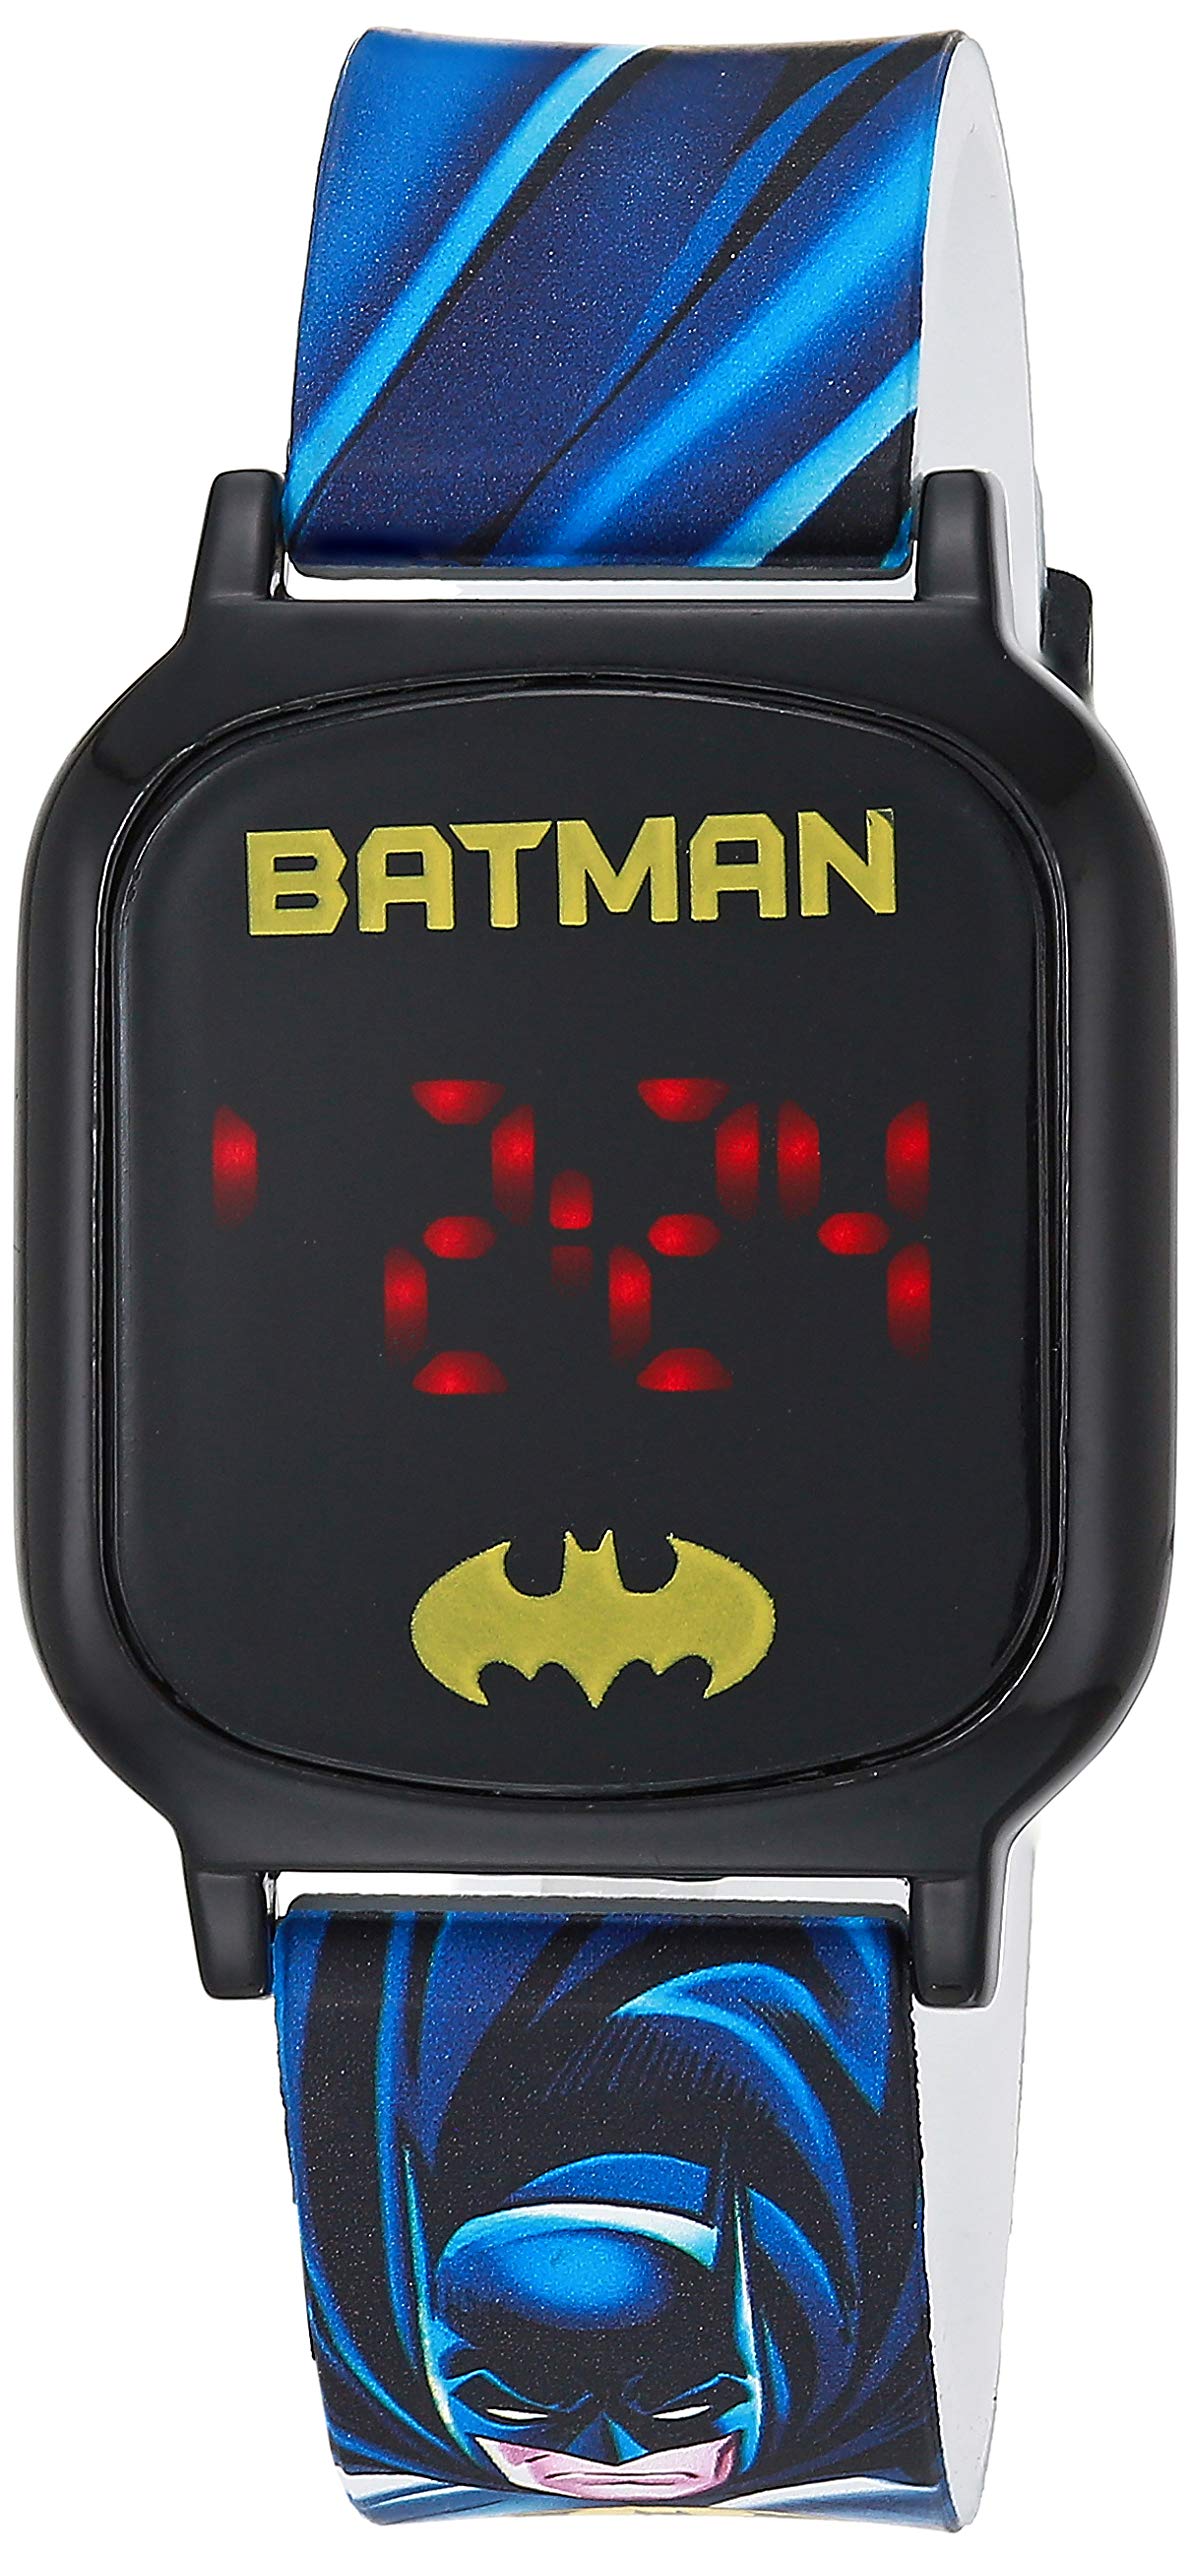 Accutime Official Batman Kid's Watch.